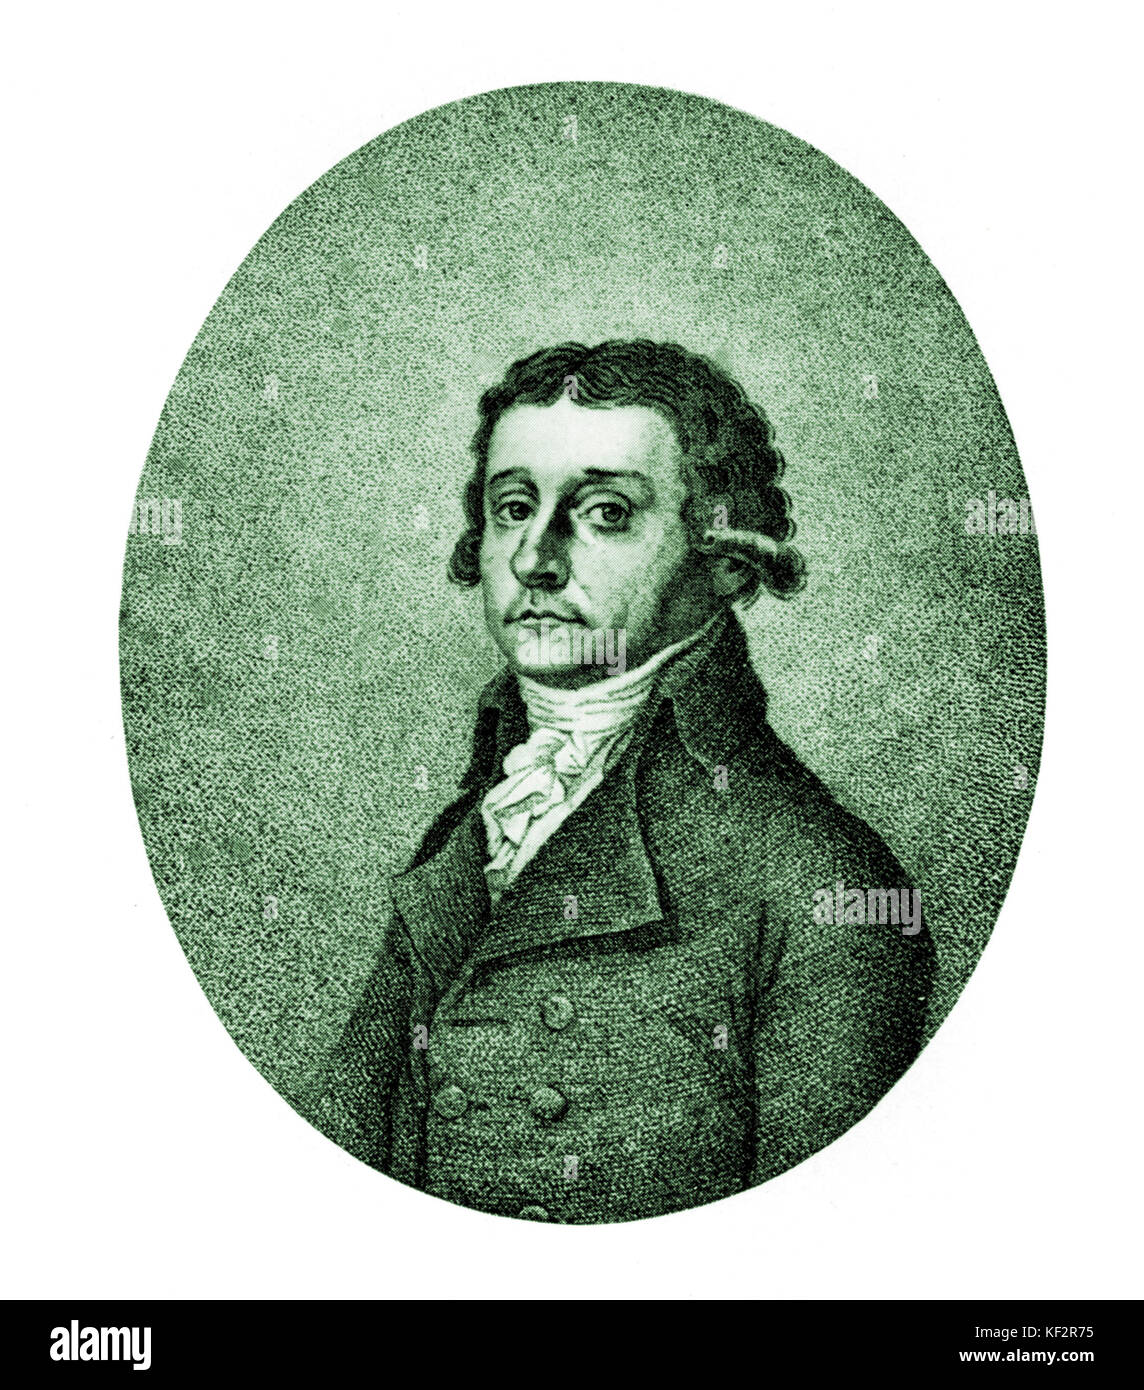 Antonio Salieri portrait, 1825. Italian composer, conductor and teacher (1750-1825). Stock Photo